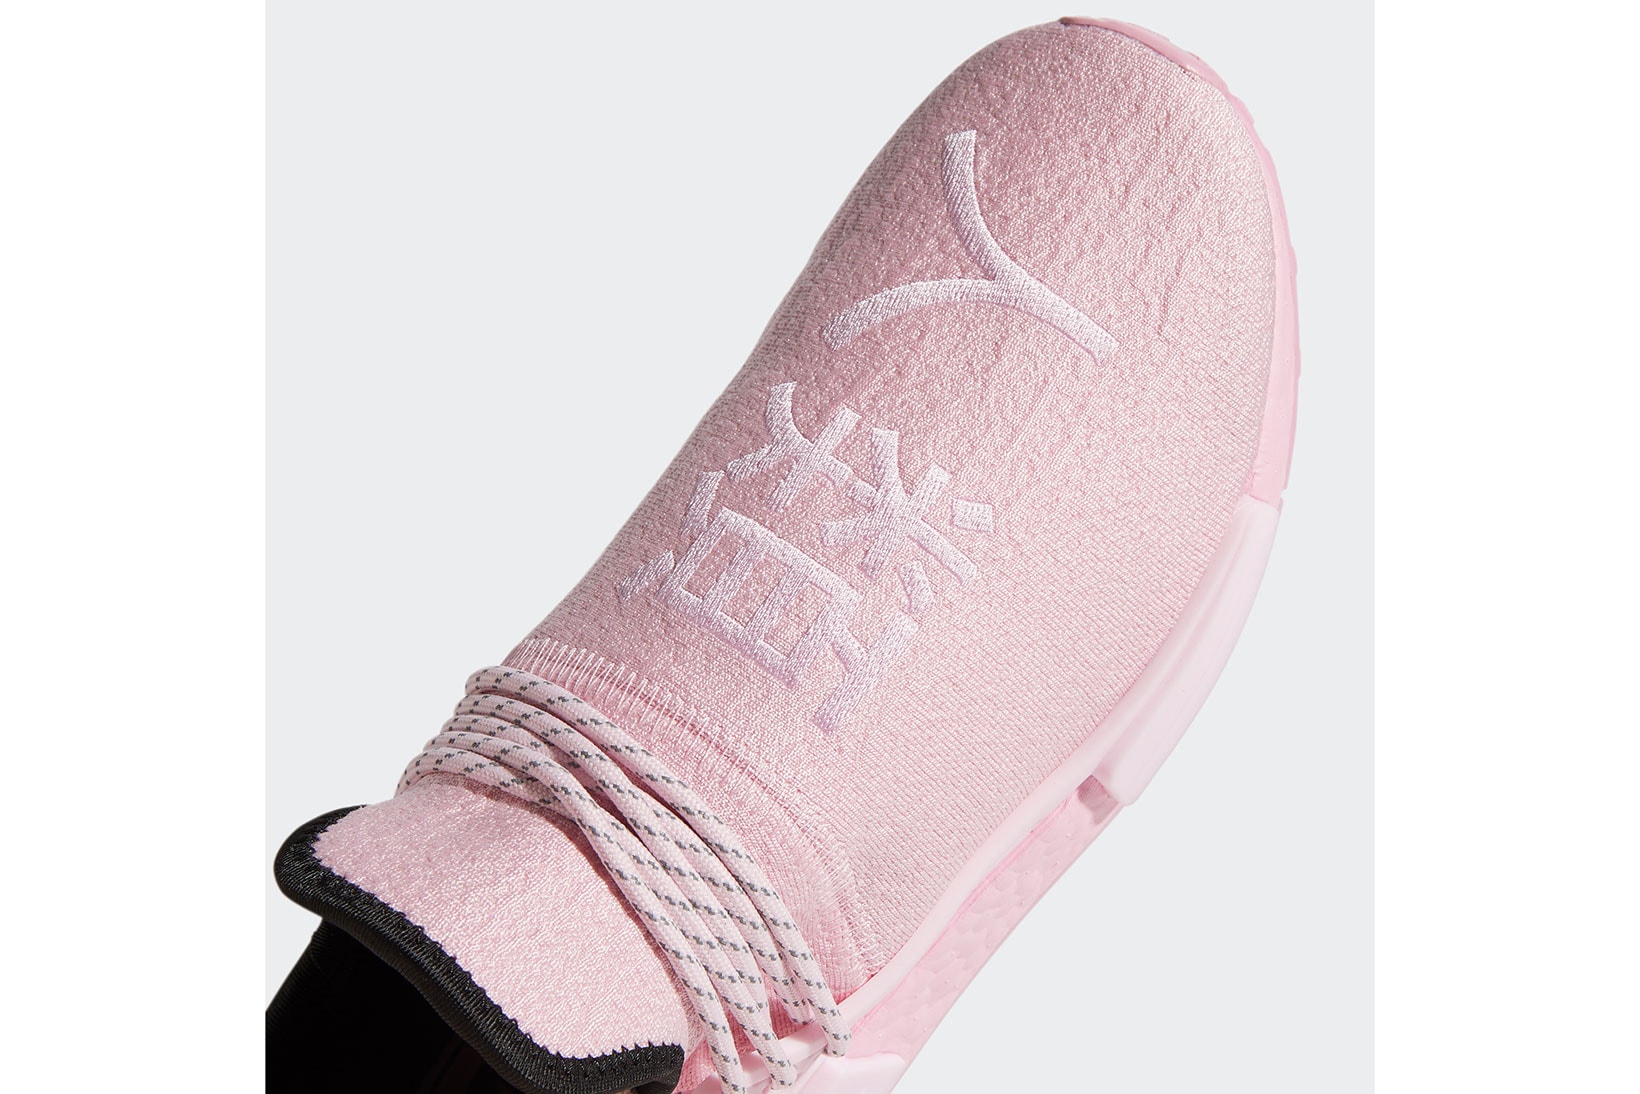 pharrell williams adidas originals hu nmd collaboration pink sneakers footwear shoes kicks sneakerhead close up toe